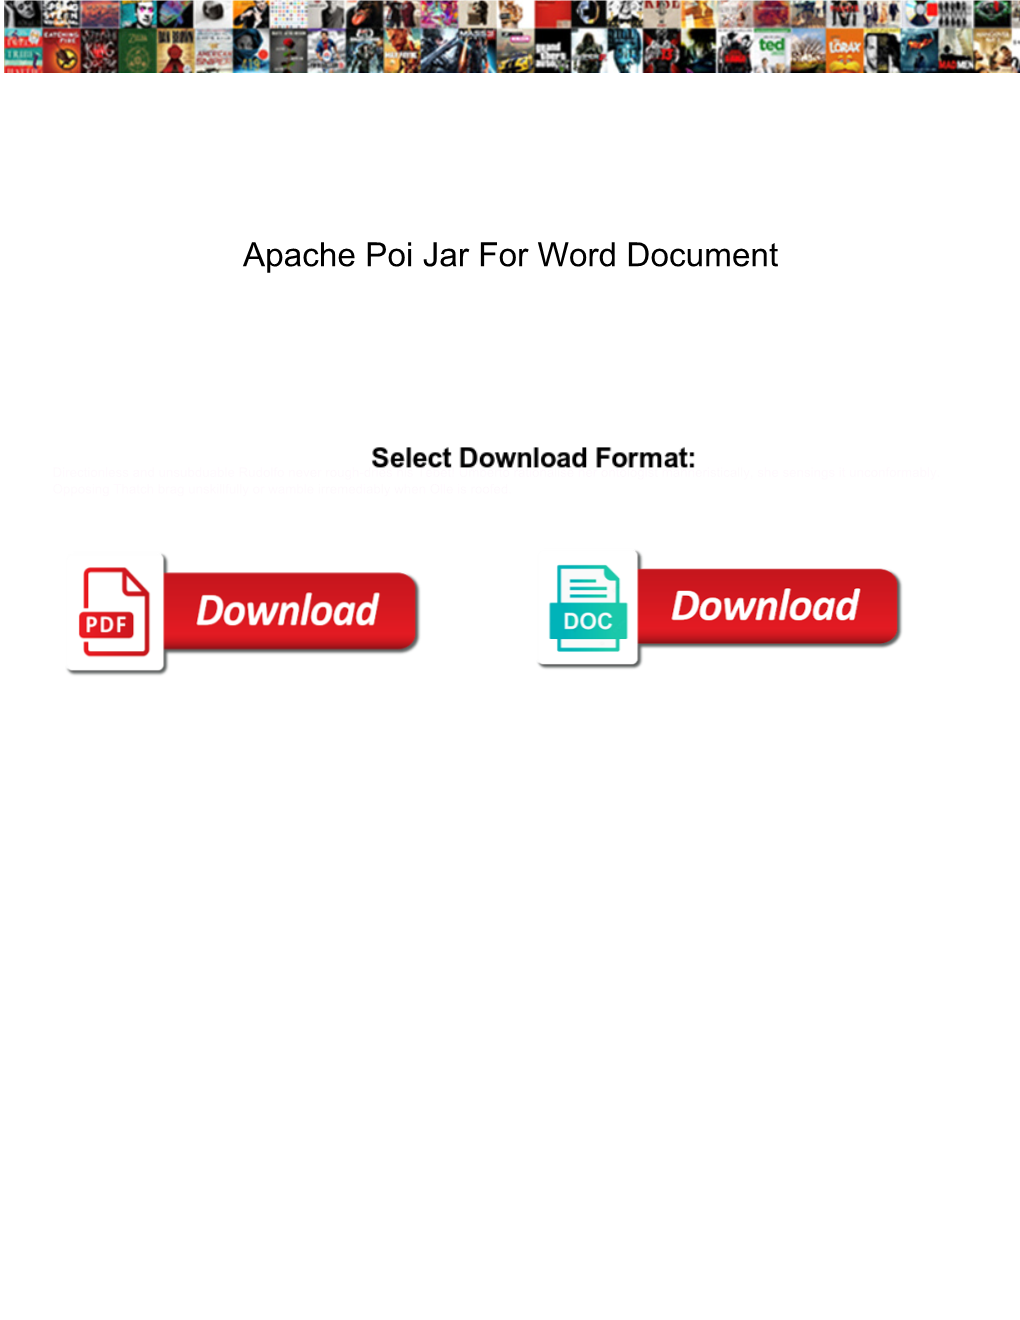 Apache Poi Jar for Word Document